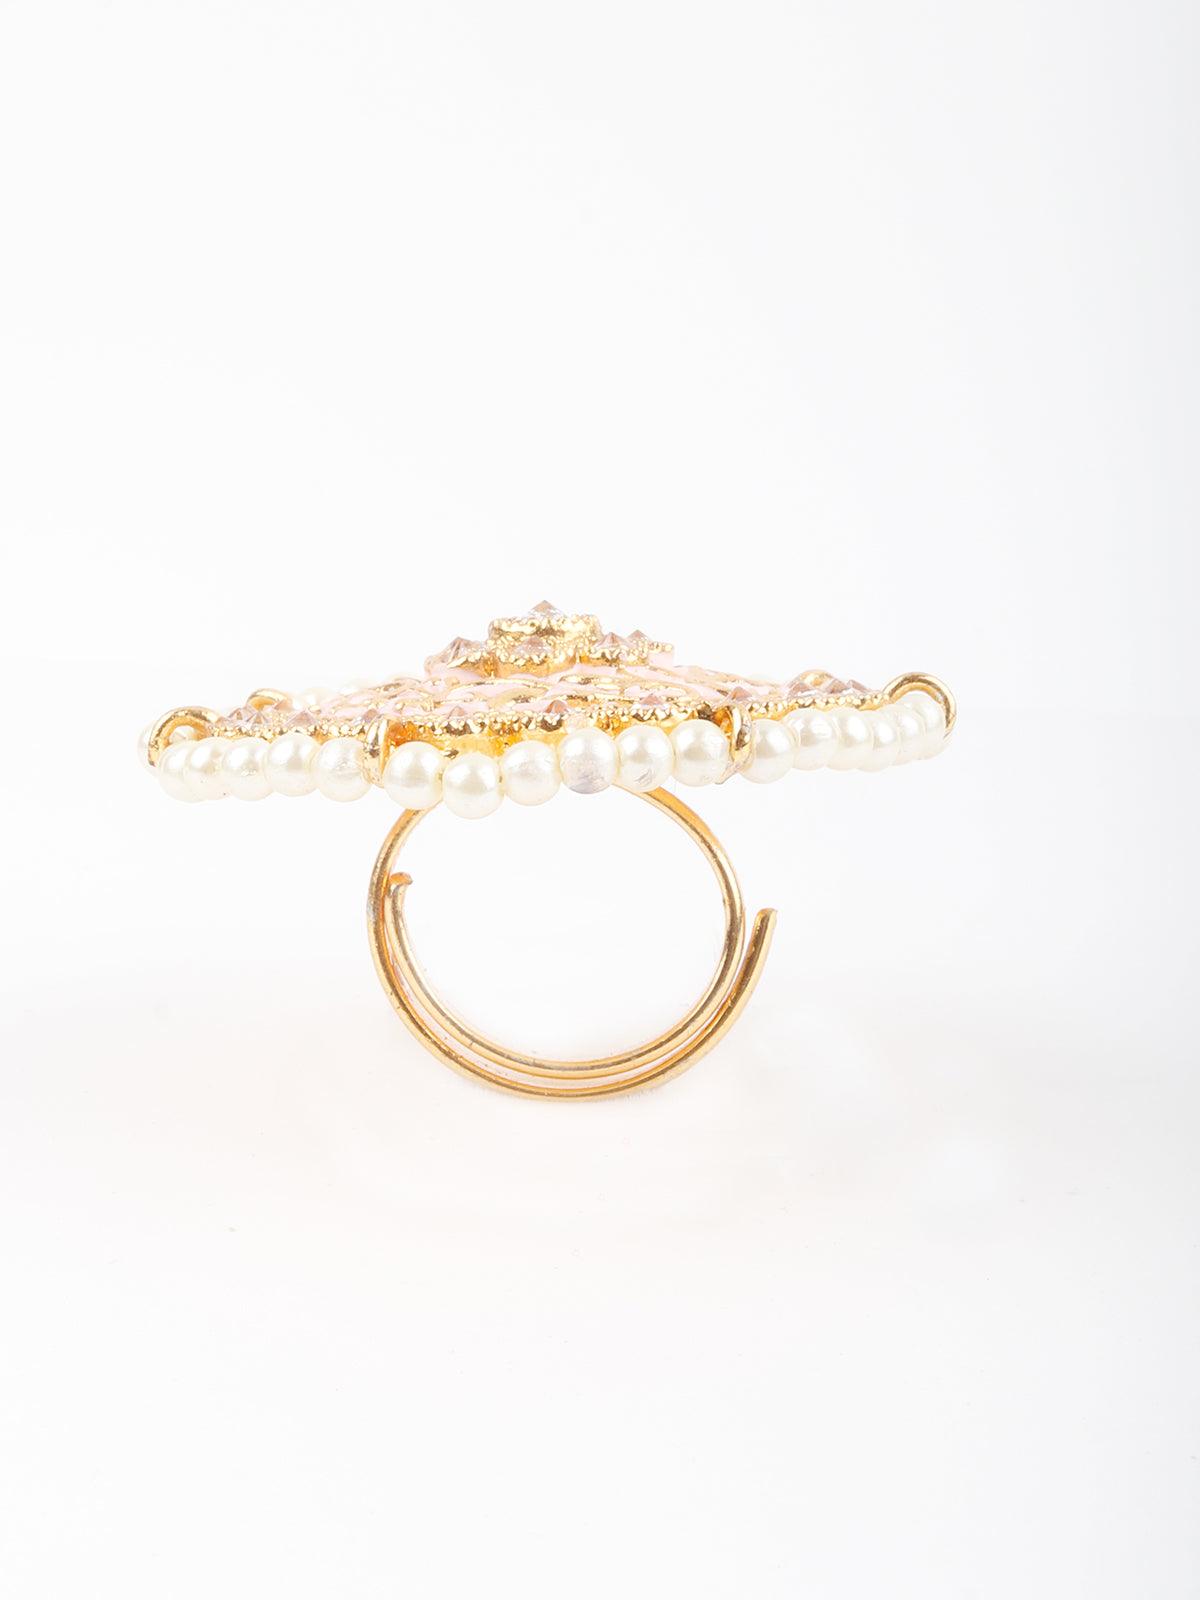 POLIVA Tanishq Silver Jewellery Pearl Ring| Alibaba.com